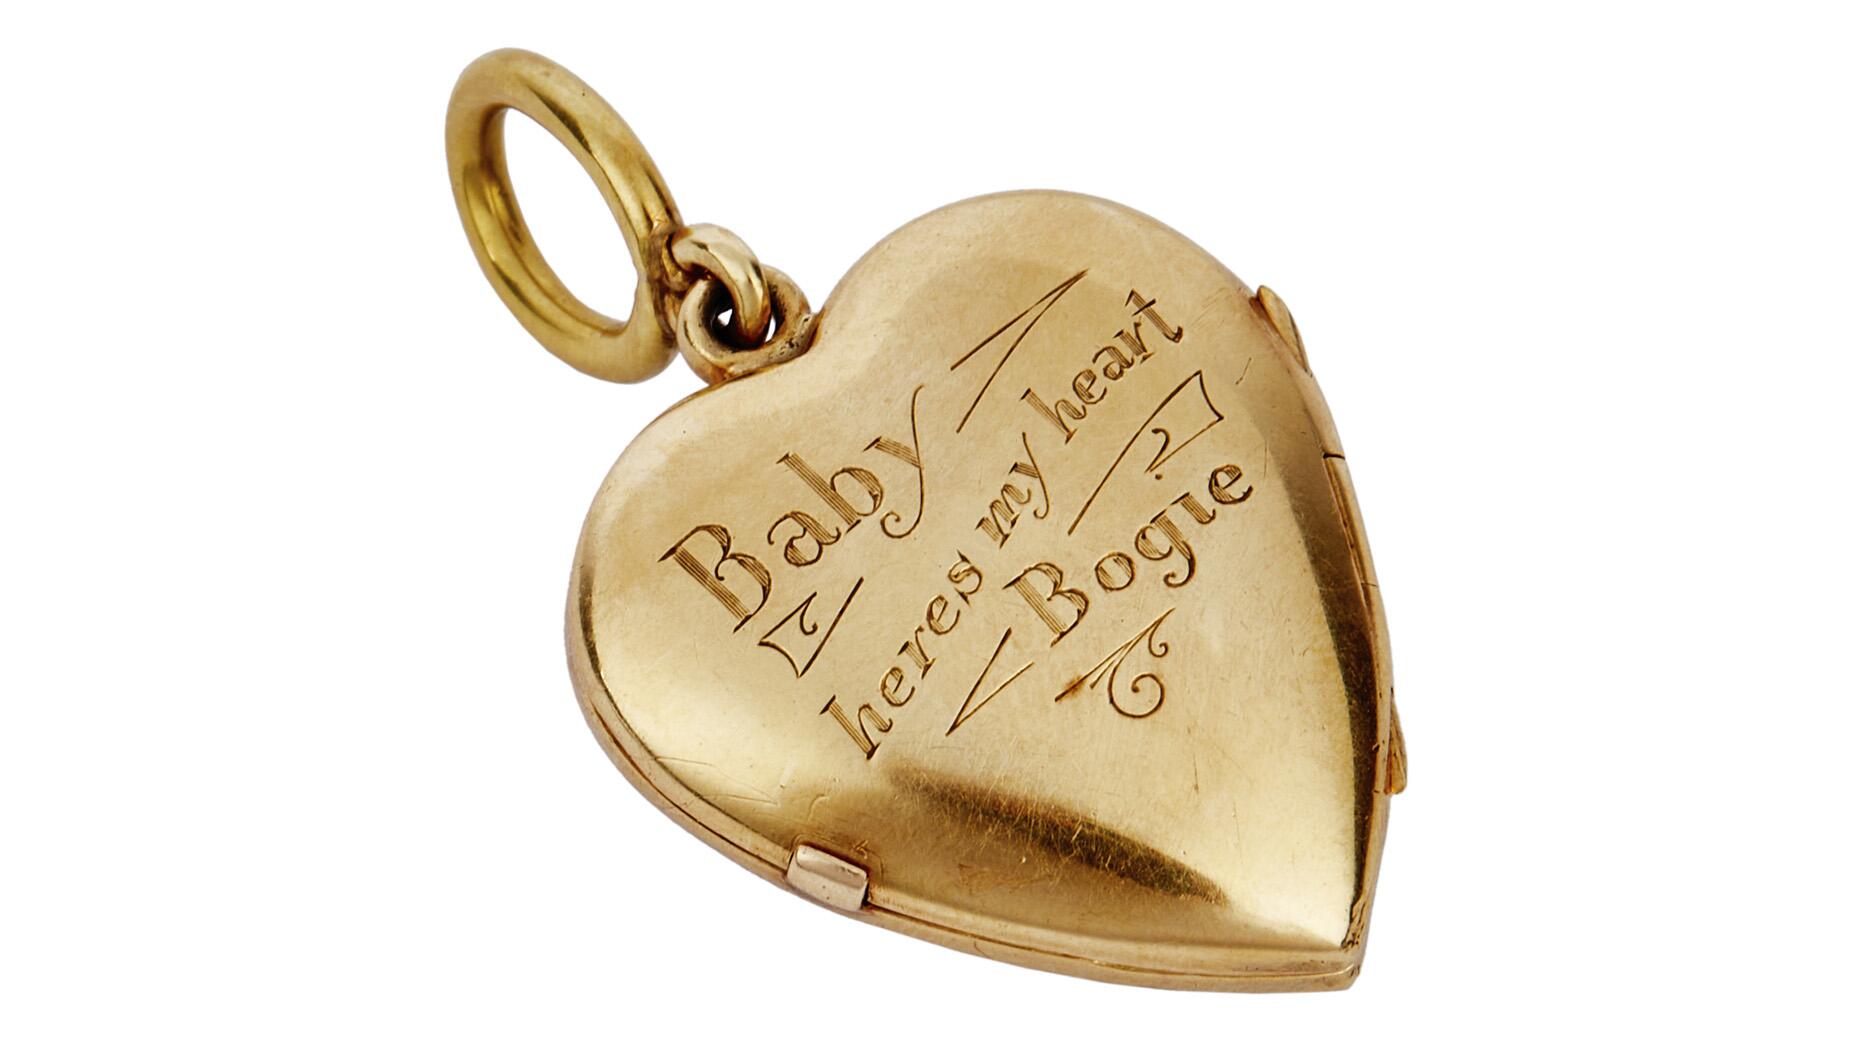 Gold locket Humphrey Bogart gave to Lauren Bacall